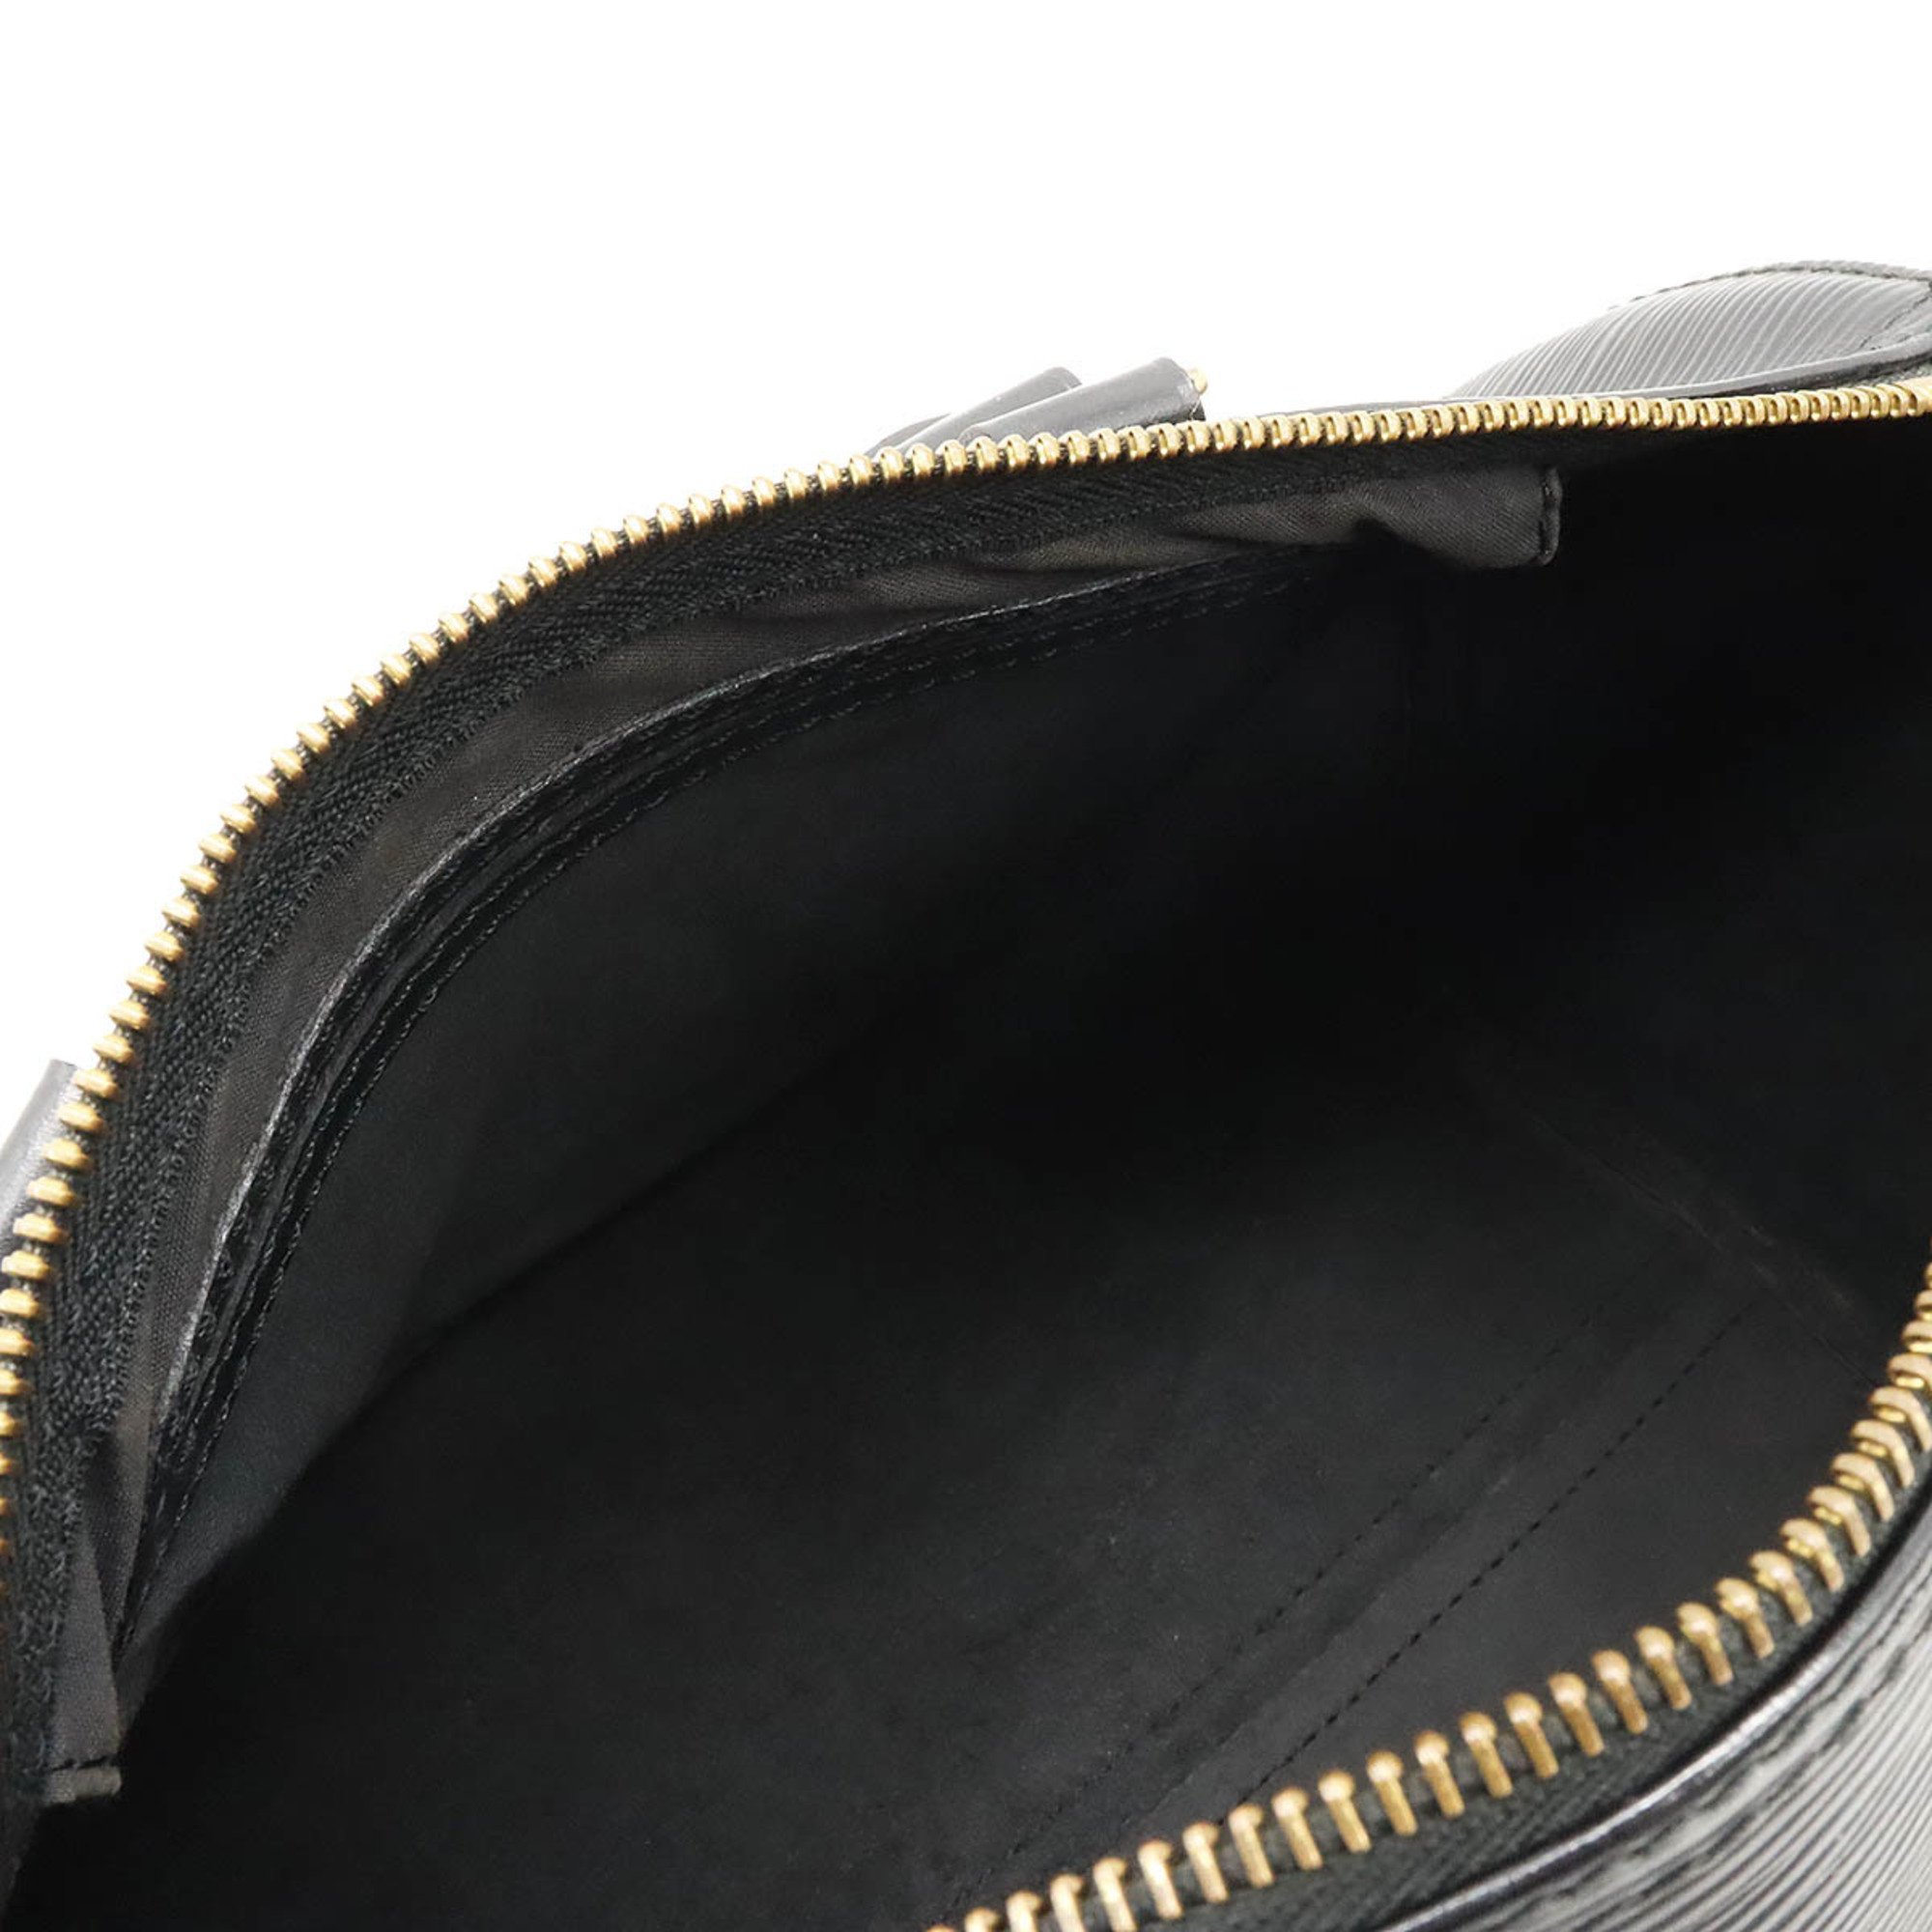 LOUIS VUITTON Louis Vuitton Epi Speedy 25 Handbag Boston Bag Leather Noir Black M59032